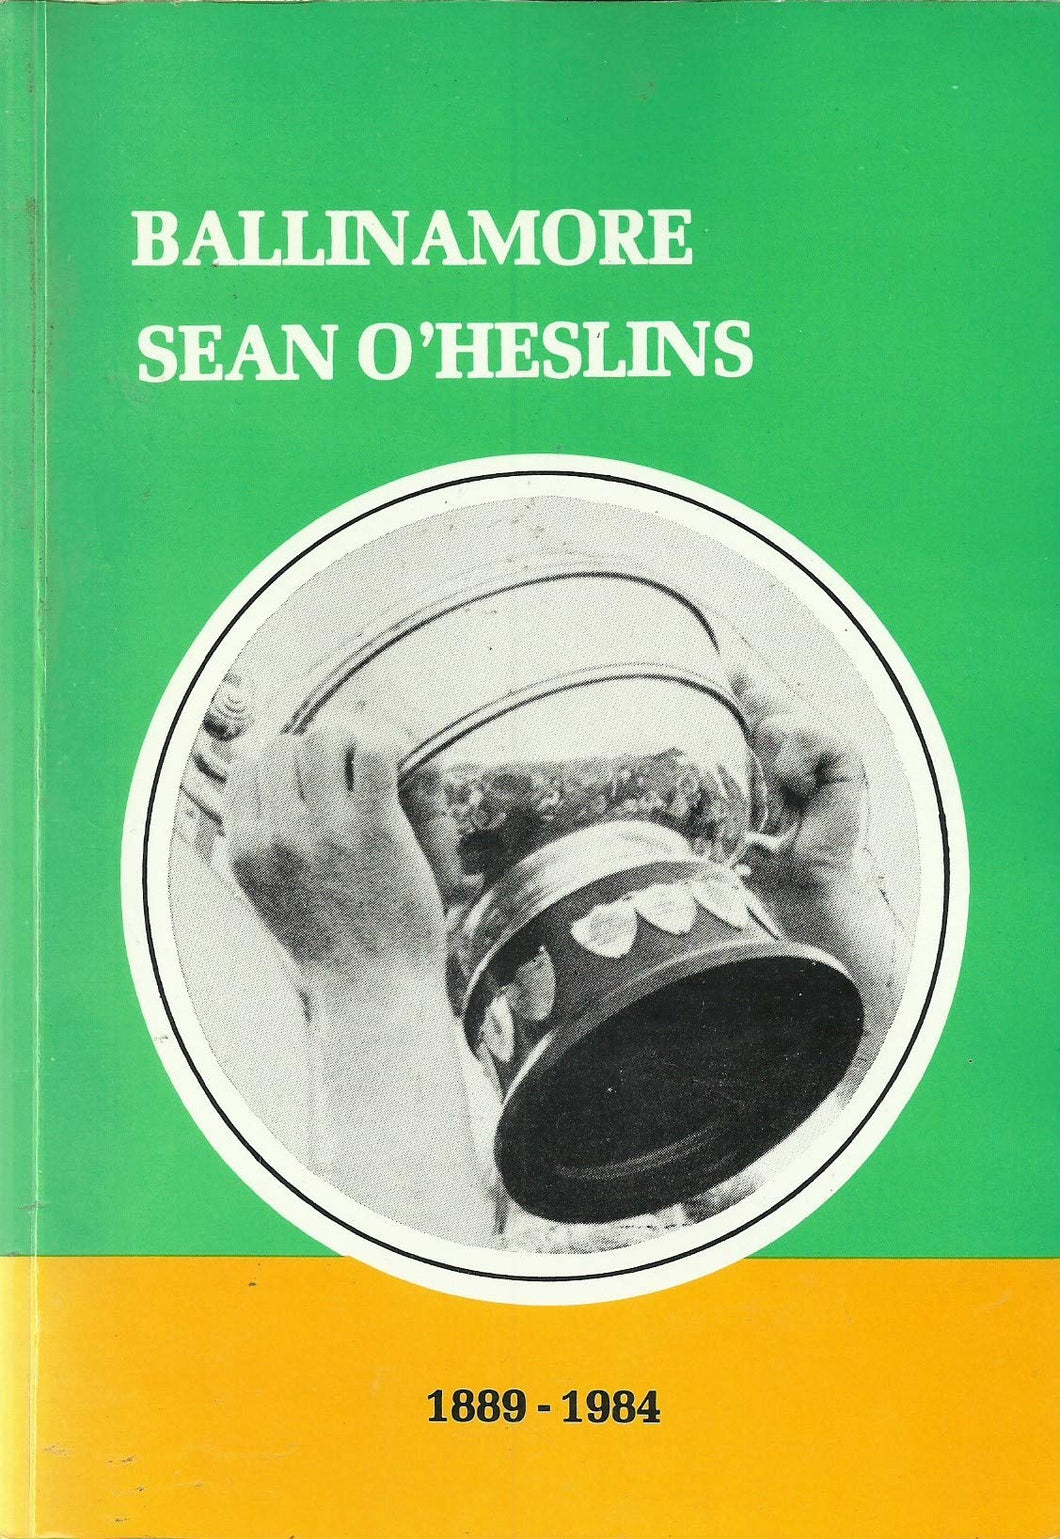 Ballinamore Sean O'Heslins, 1889-1984